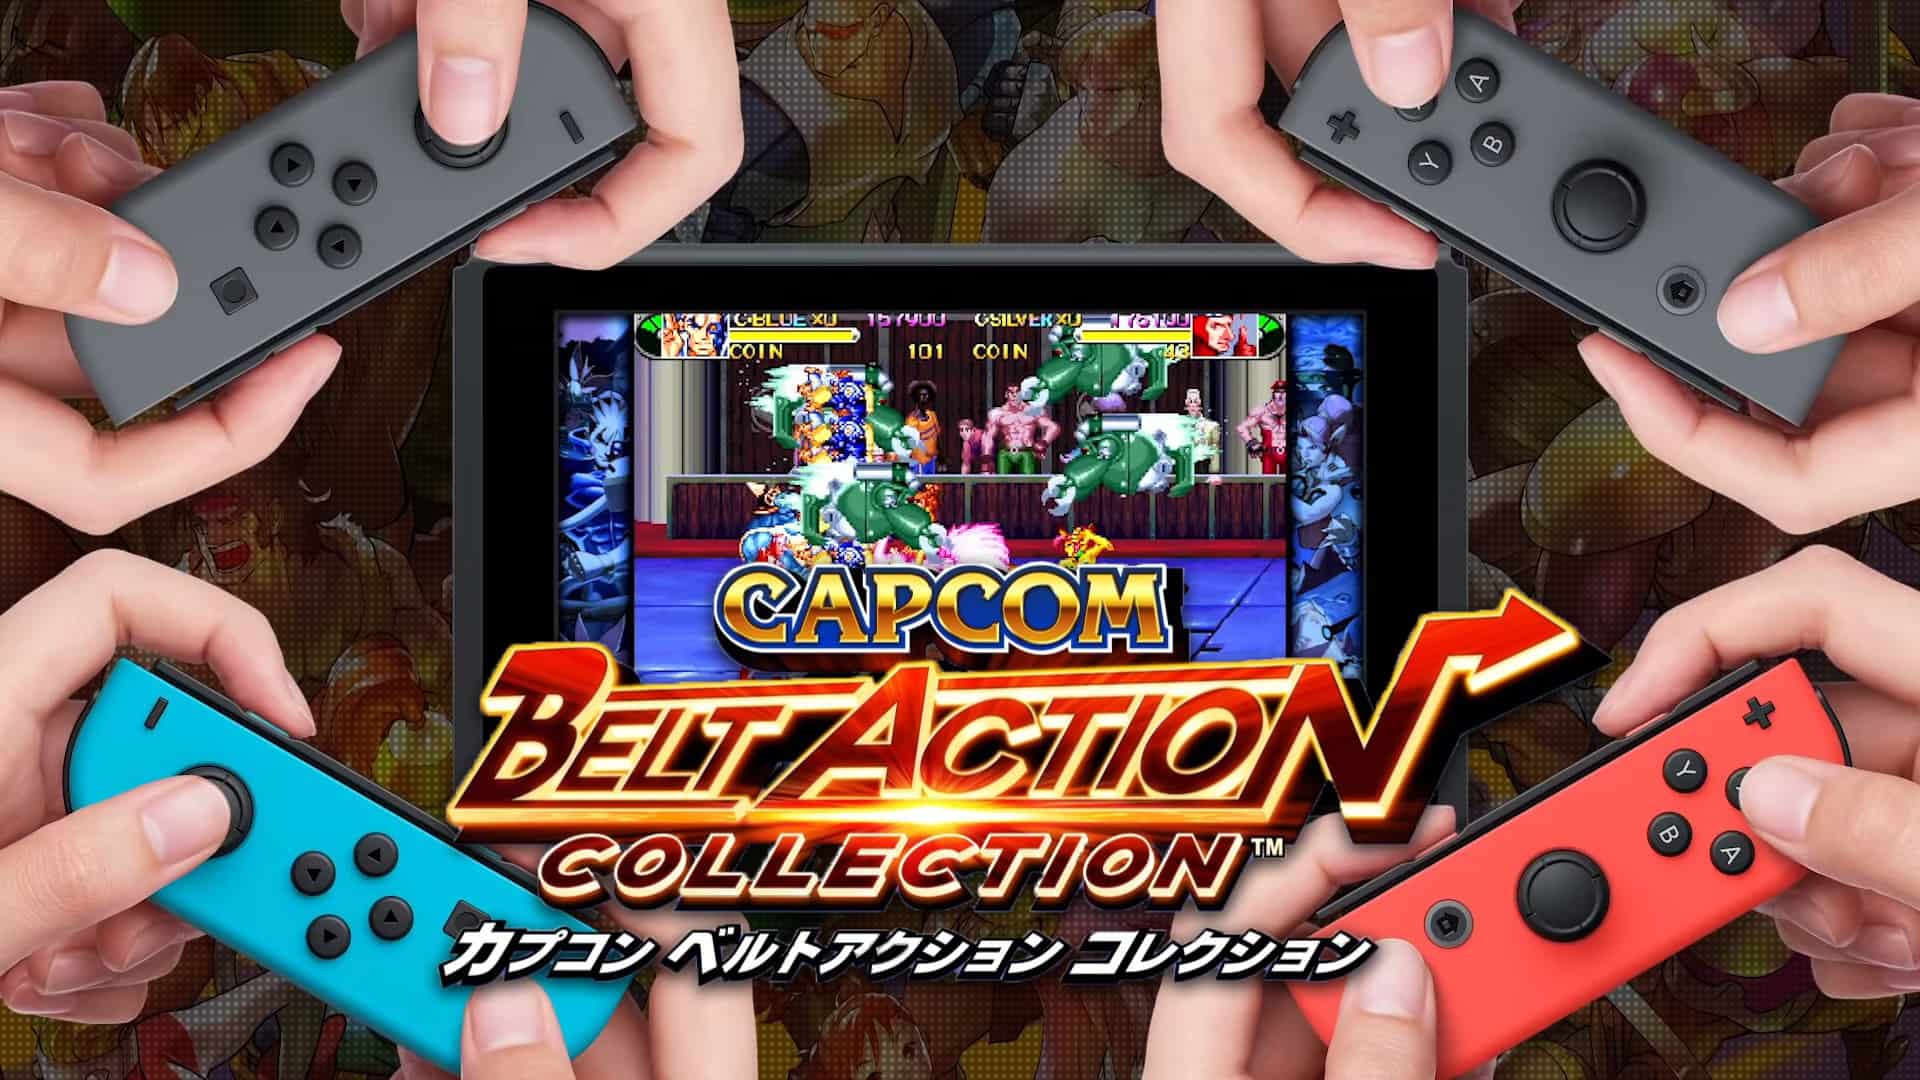 Capcom Belt Action Collection 2